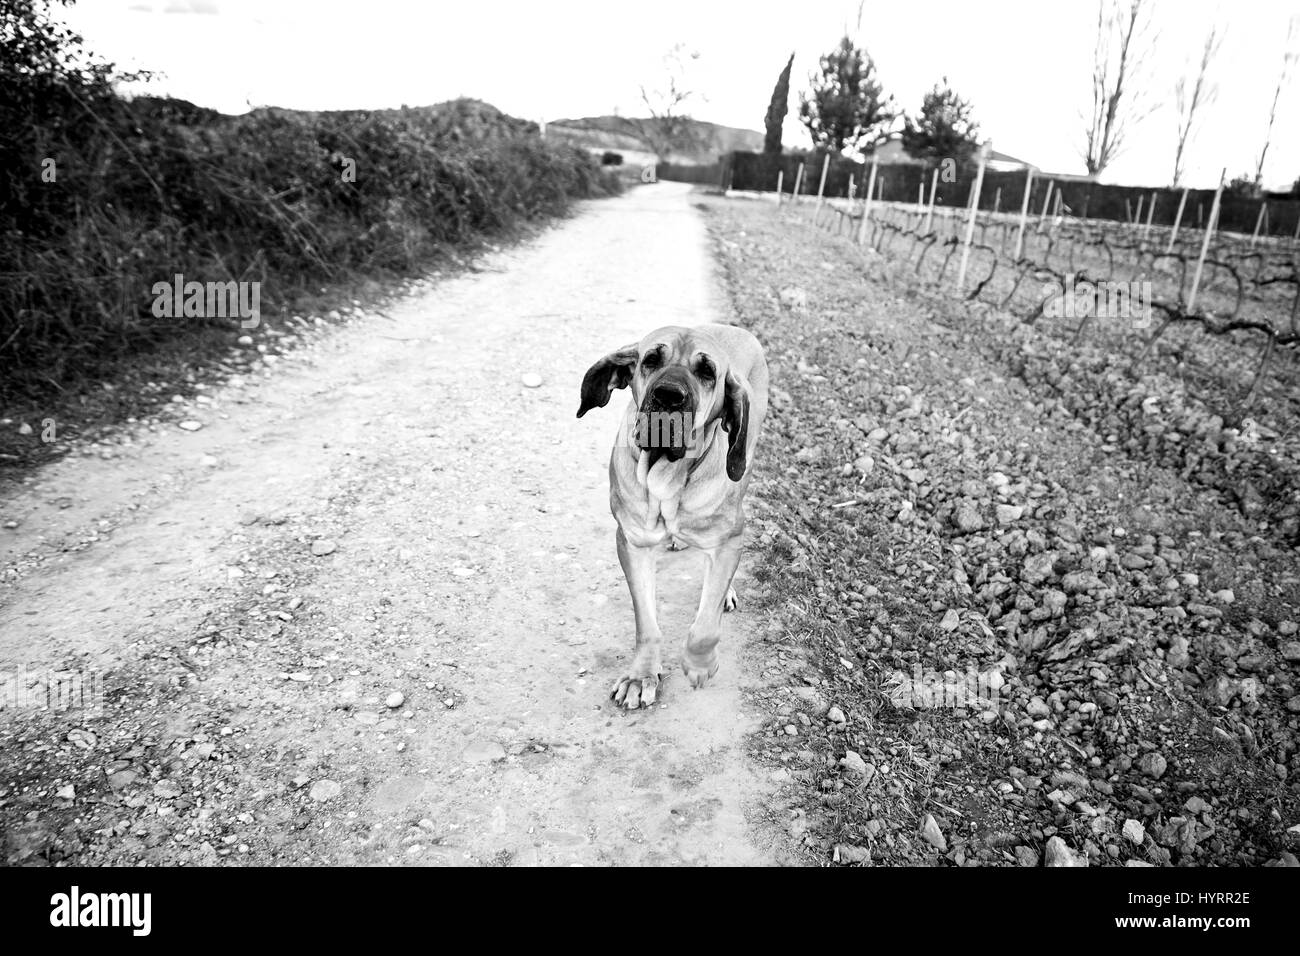 Dog breed fila brasileiro Black and White Stock Photos & Images